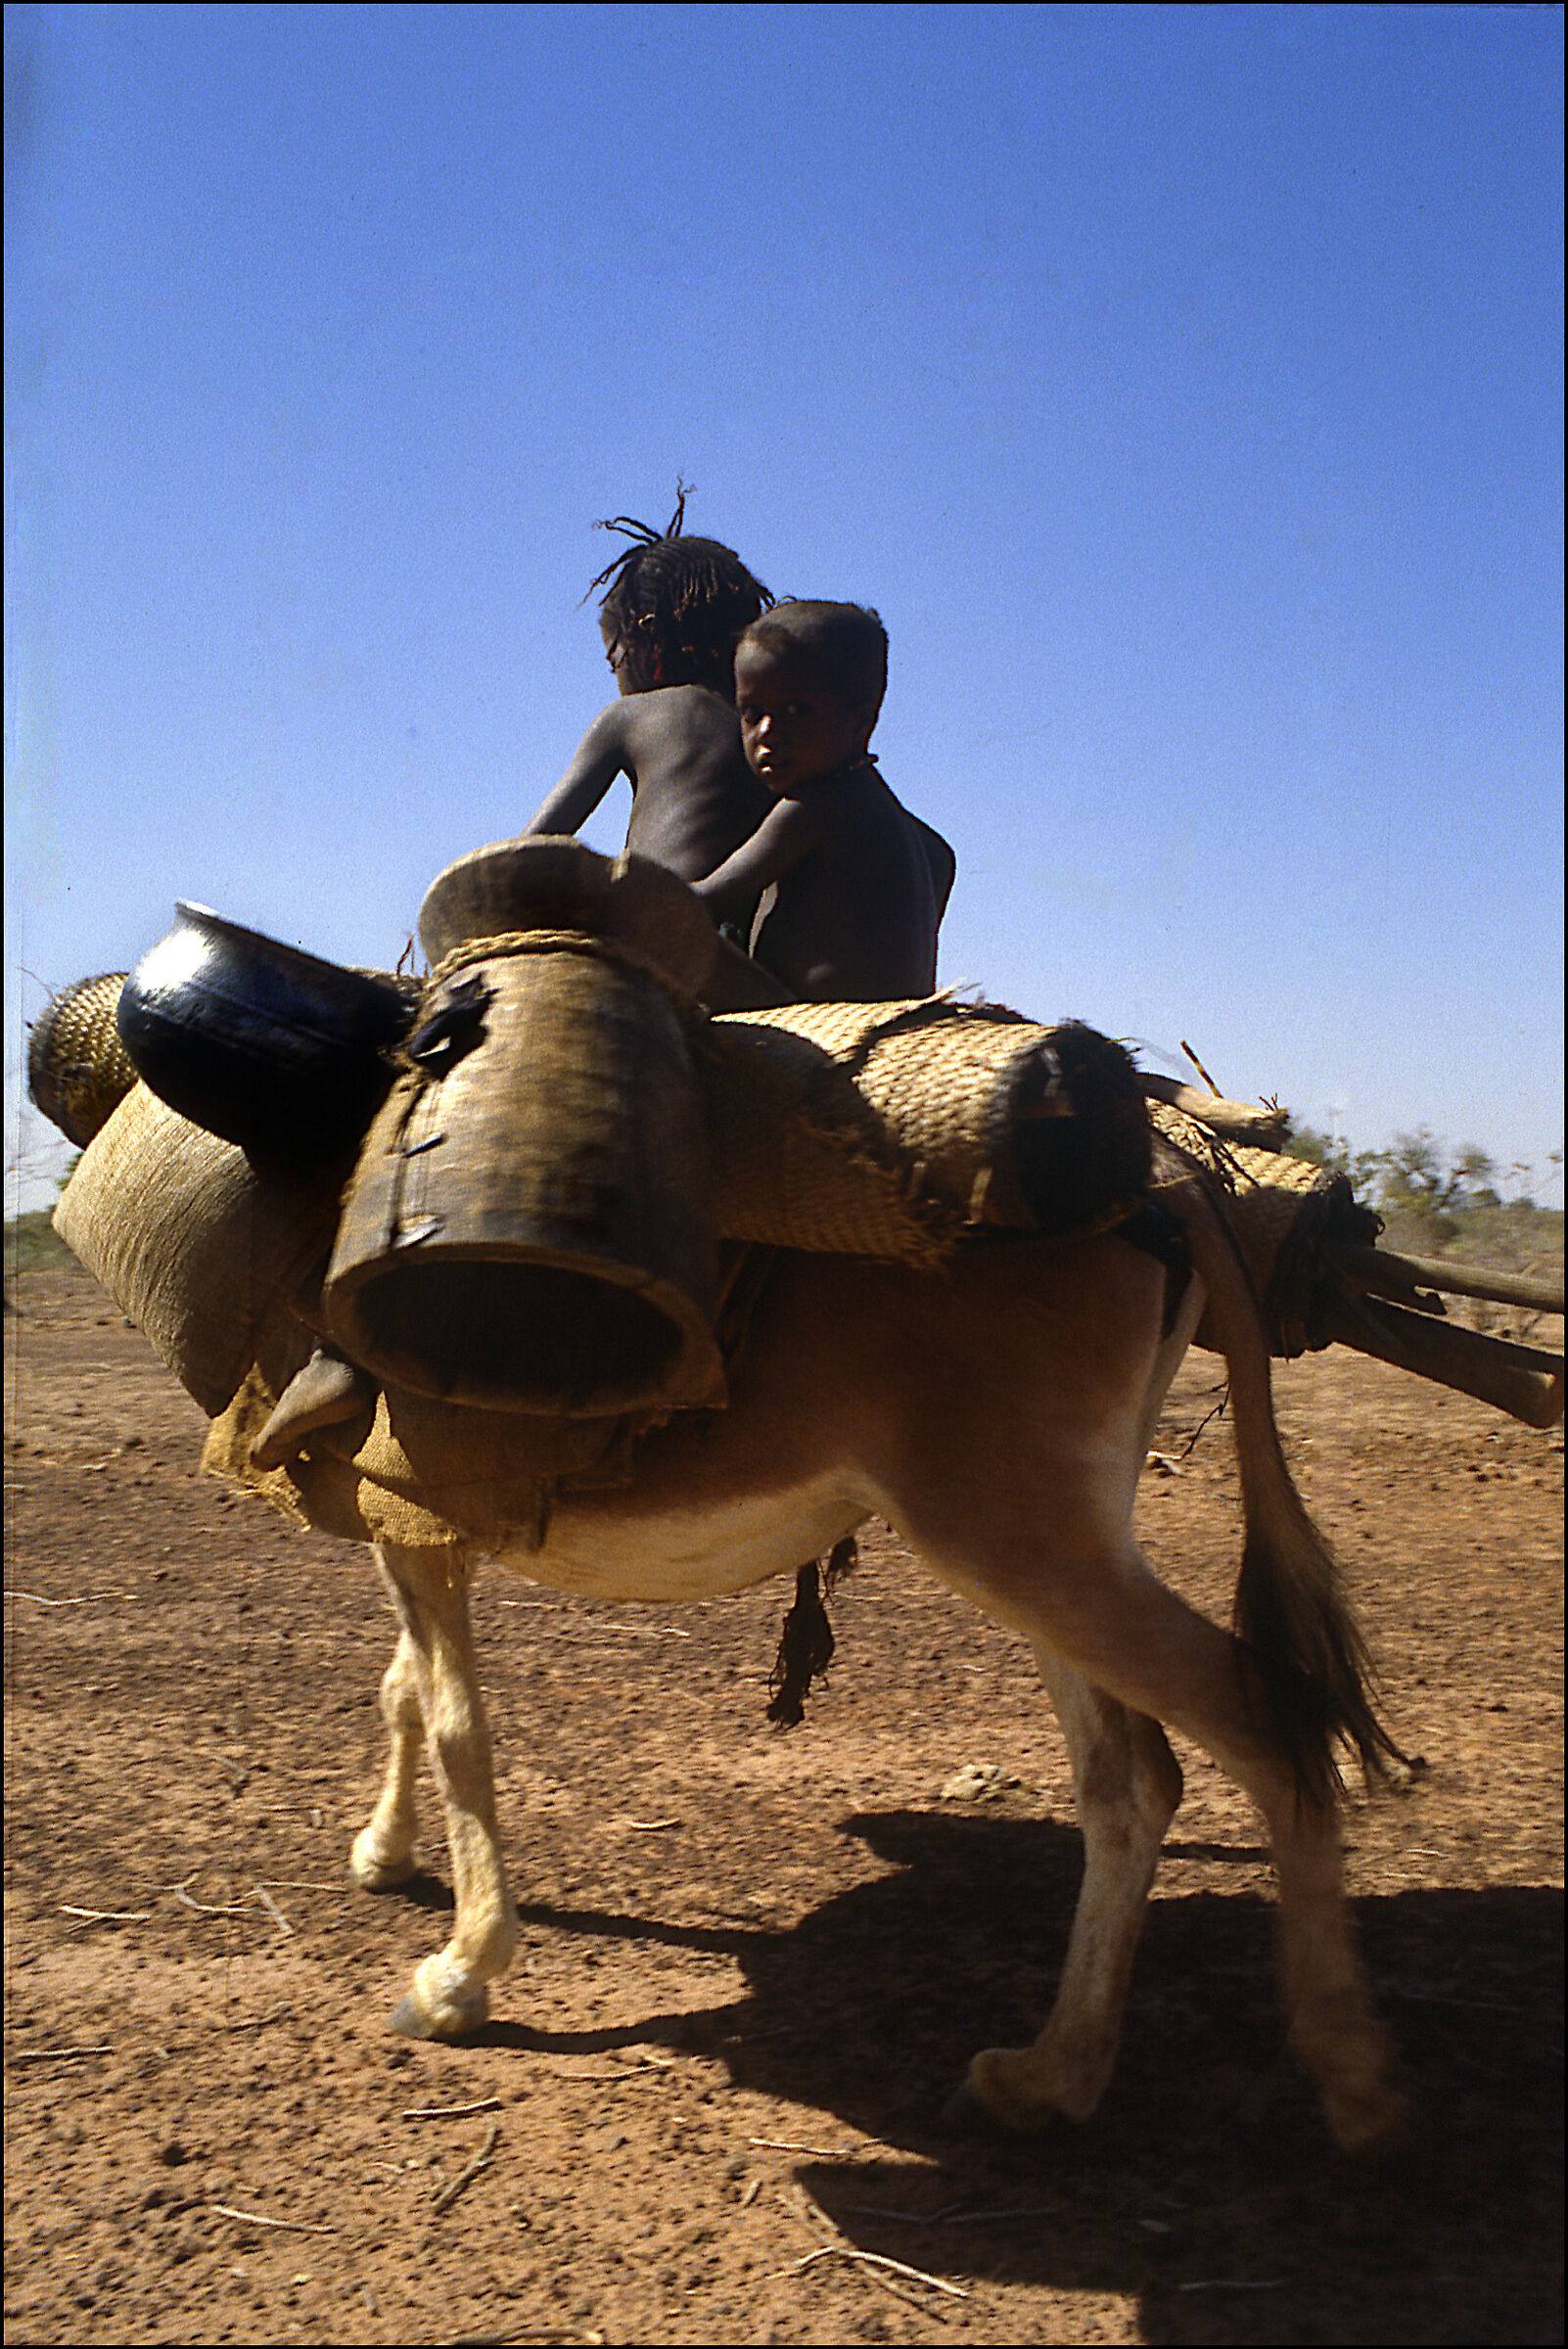 1985 Mali "nomadi nel shael"...